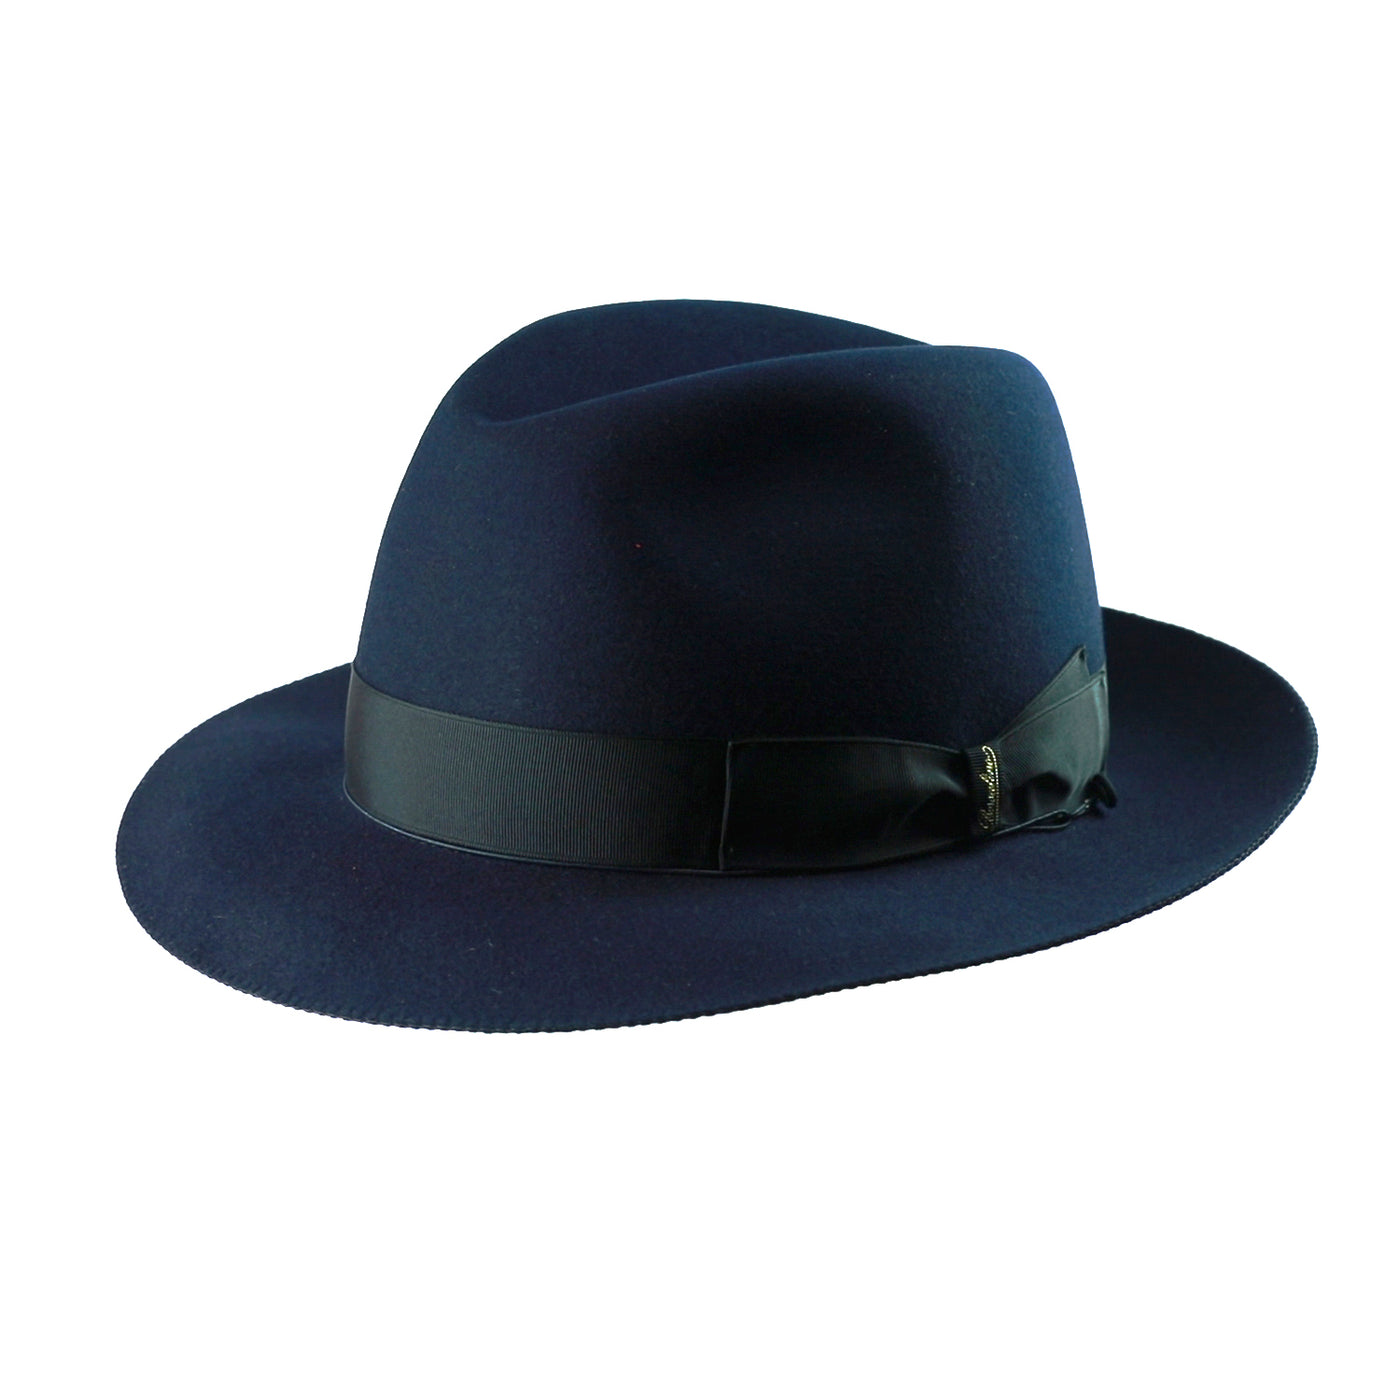 Astuccio 238 - Royal Blue, product_type] - Borsalino for Atica fedora hat